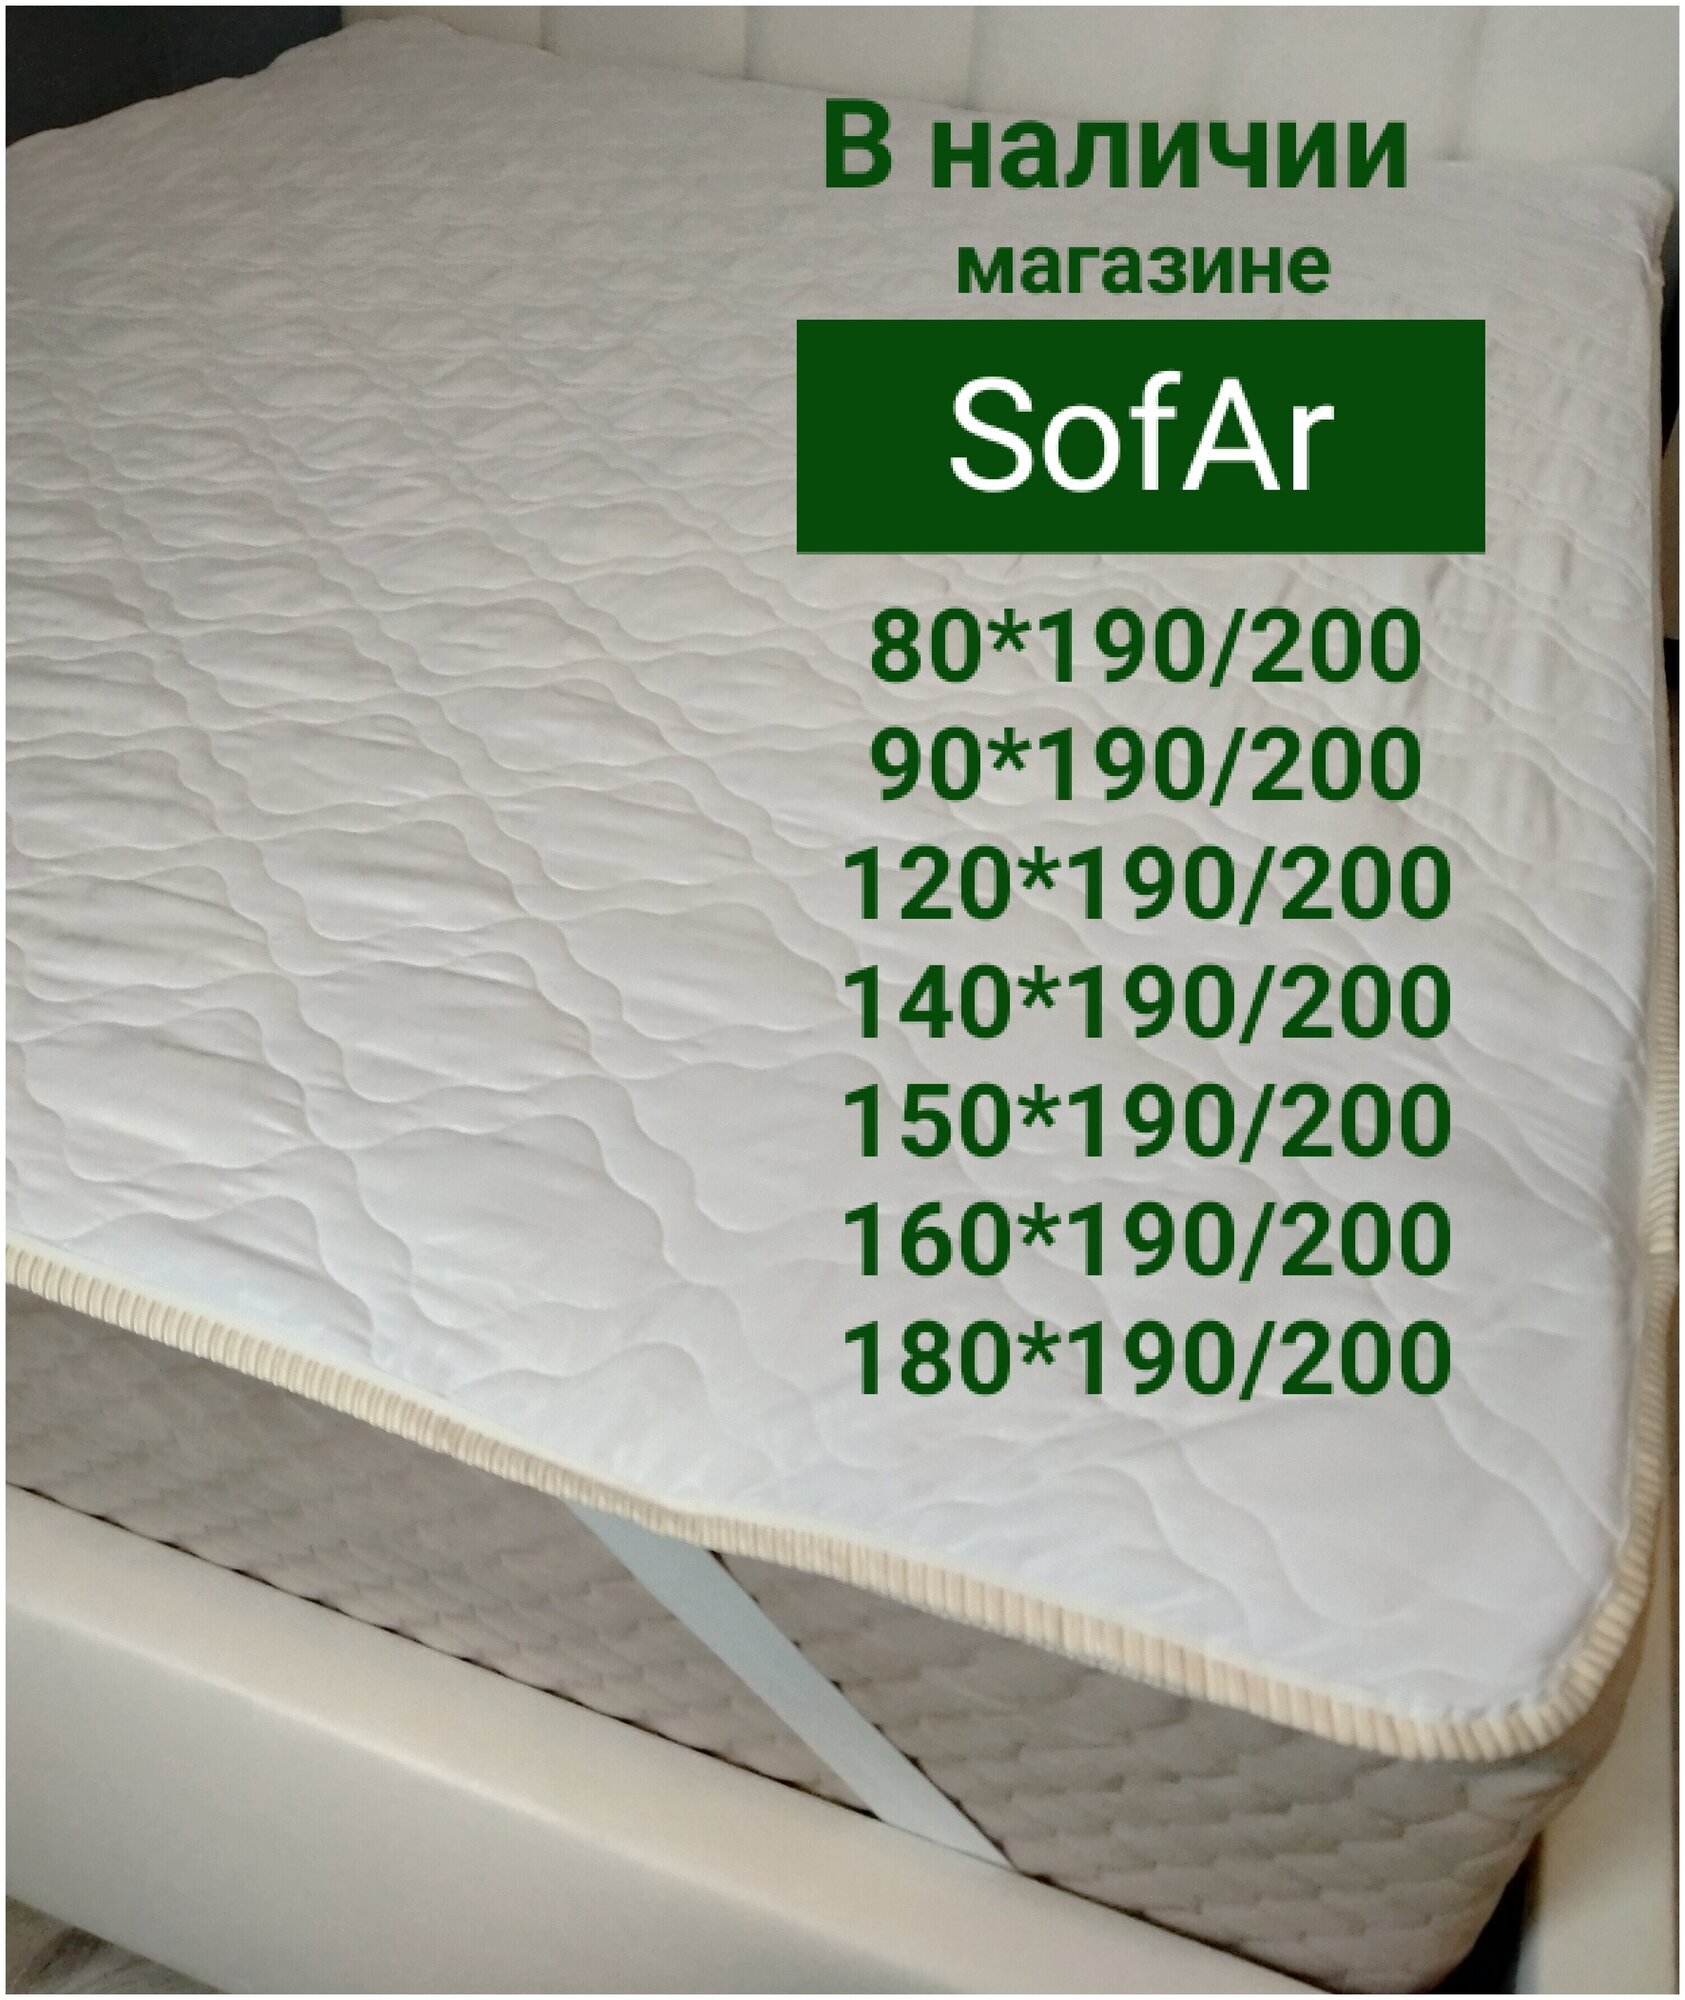 Наматрасник стеганый с резинками SofAr White Morozko 180x200 см. / Защитный чехол на матрас 180х200 см. SofAr / Топпер SofAr для матраса 180*200 см.